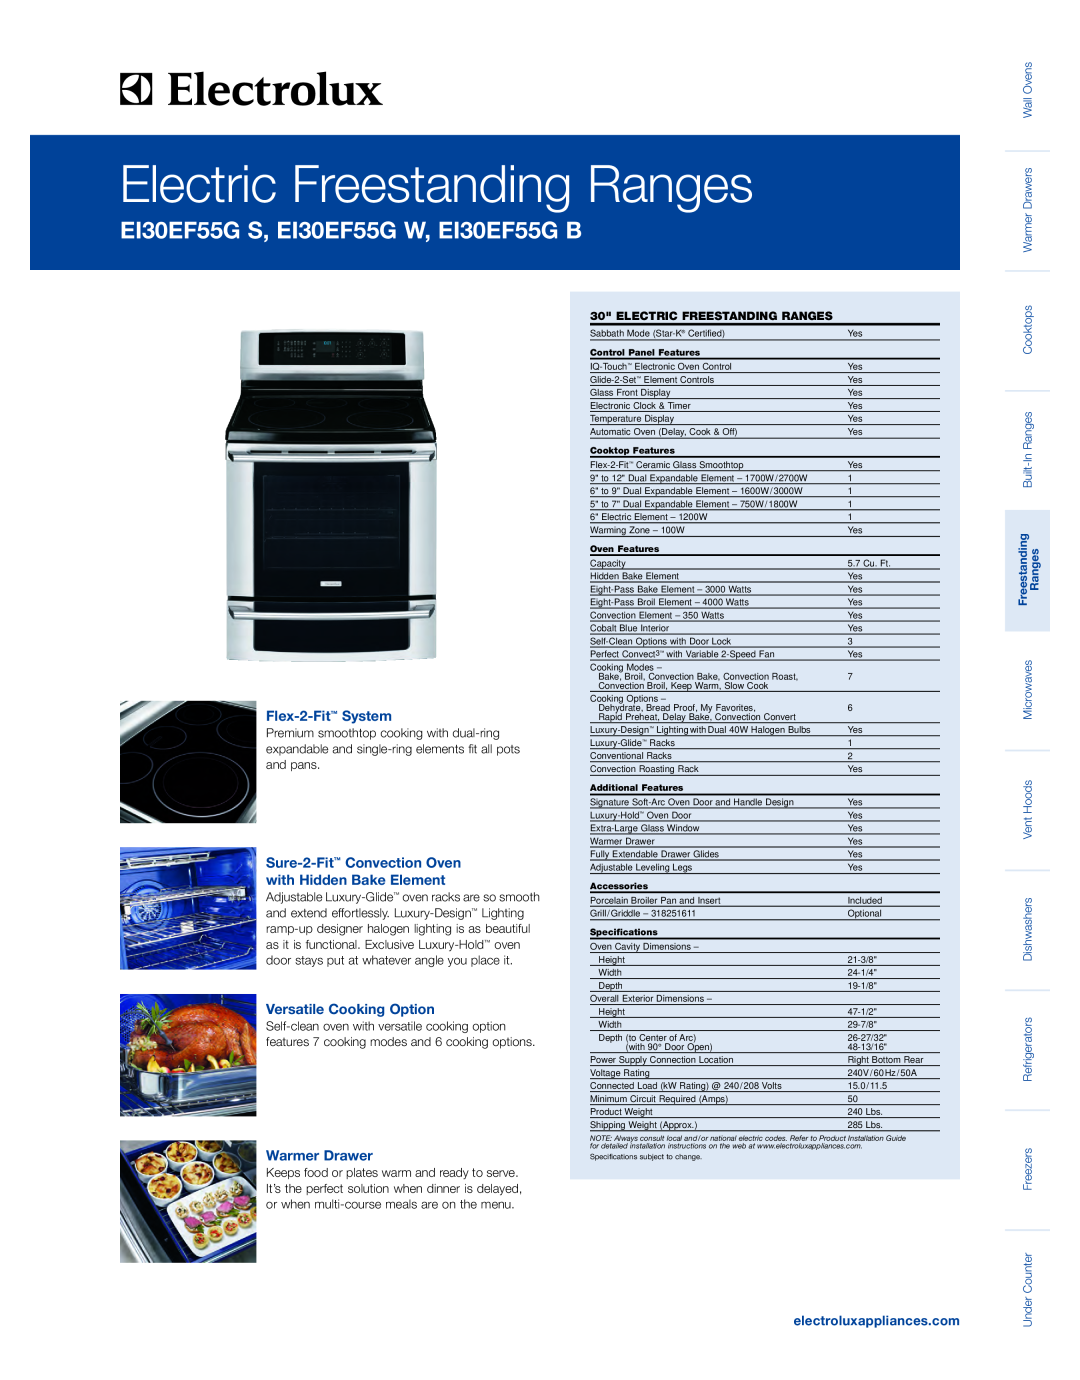 Electrolux EI30EF55GS specifications Flex-2-Fit System, Versatile Cooking Option, Warmer Drawer, electroluxappliances.com 